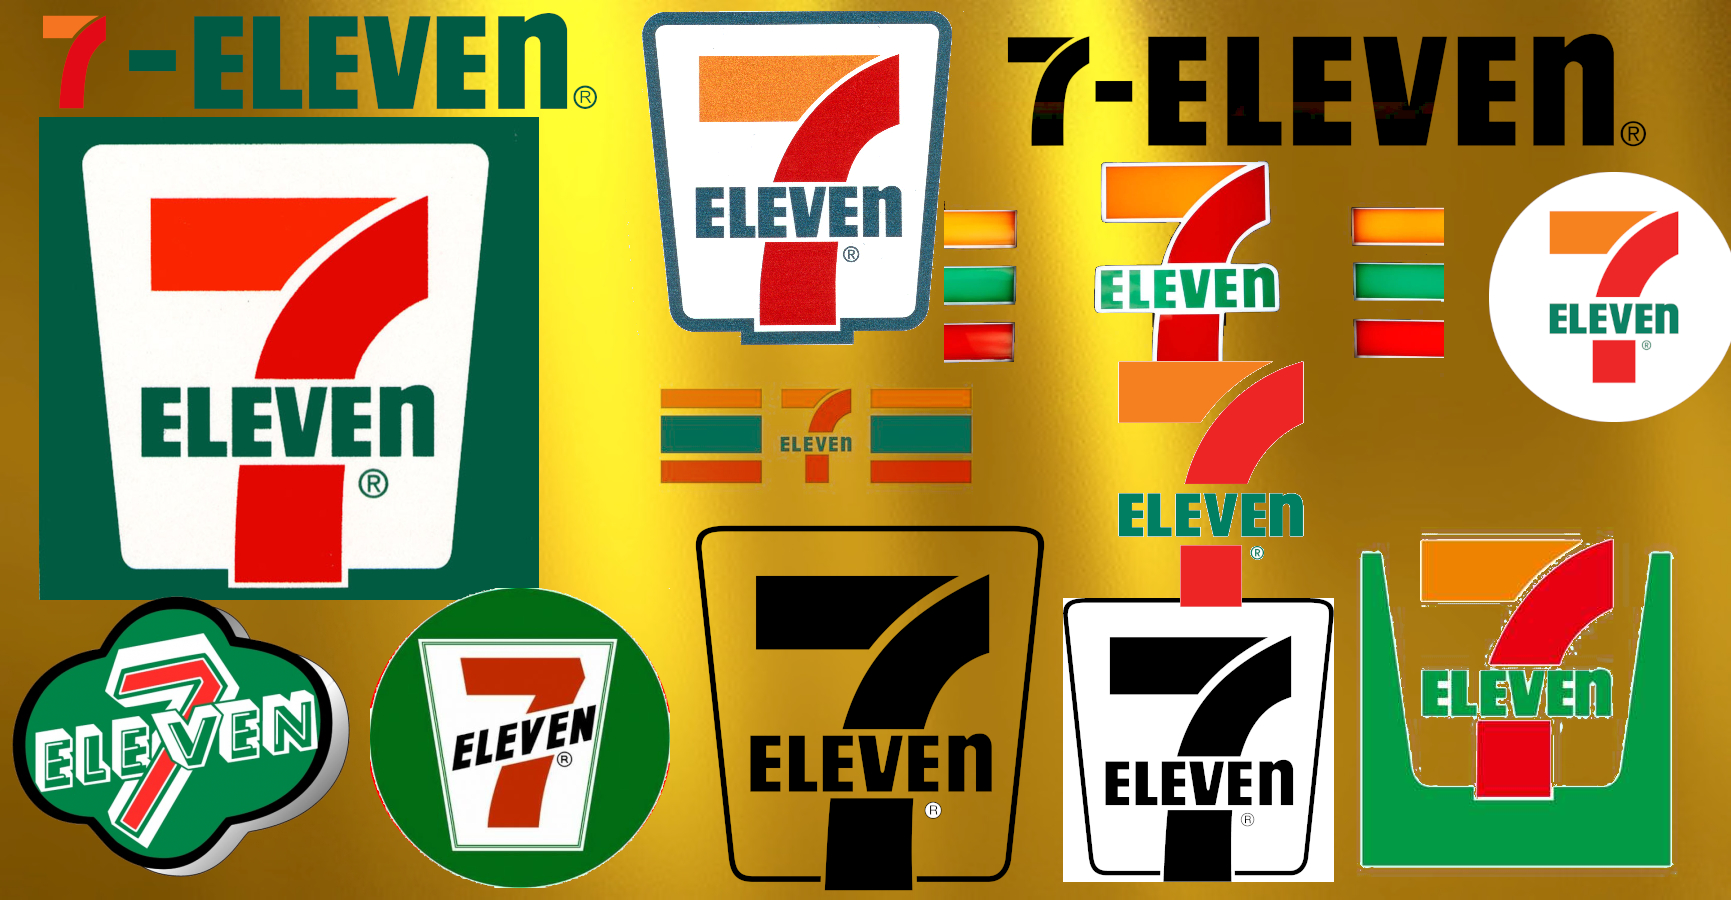 7-11 logos.jpg